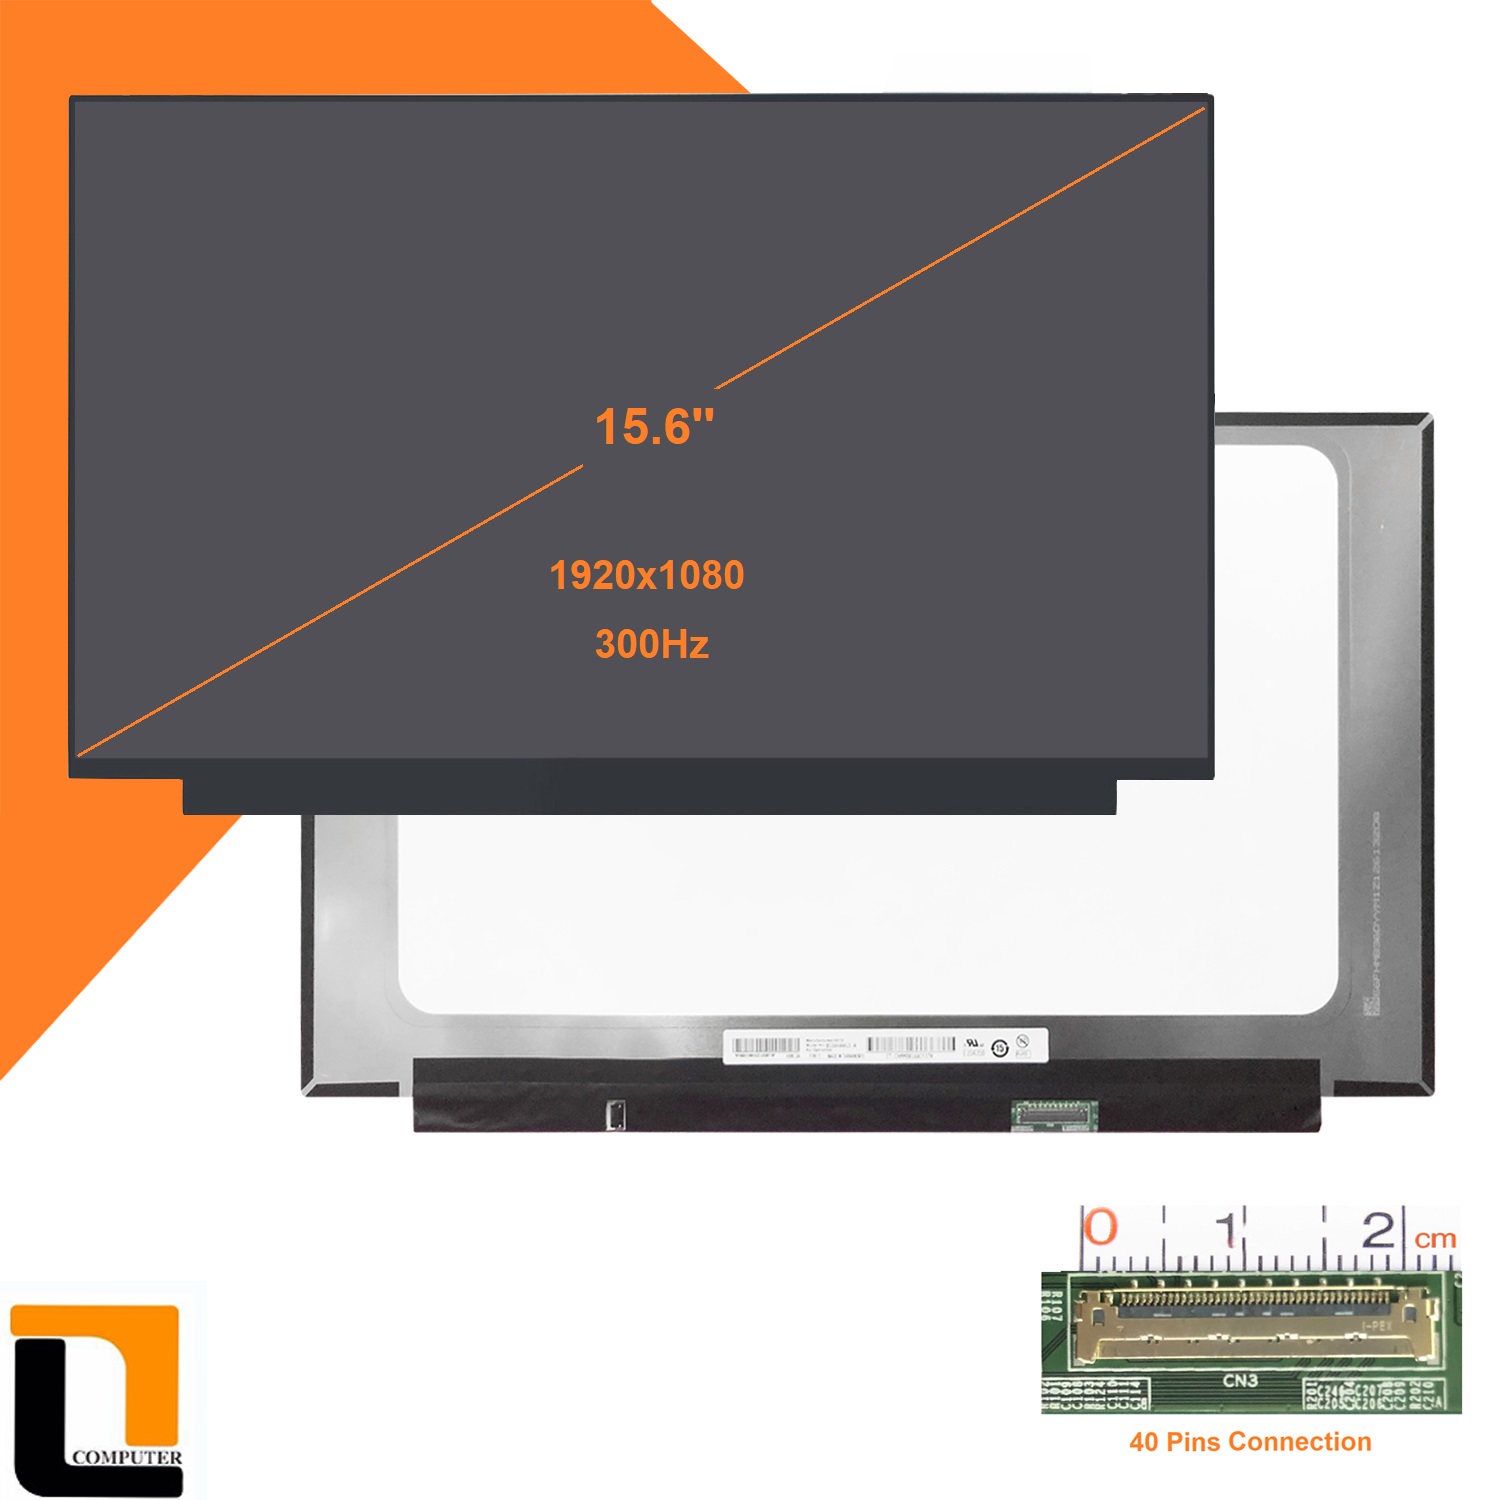 LCD 15.6 LED SLIM 30PIN DELL 3576, ASUS X510U FULL HD CÓ TAI